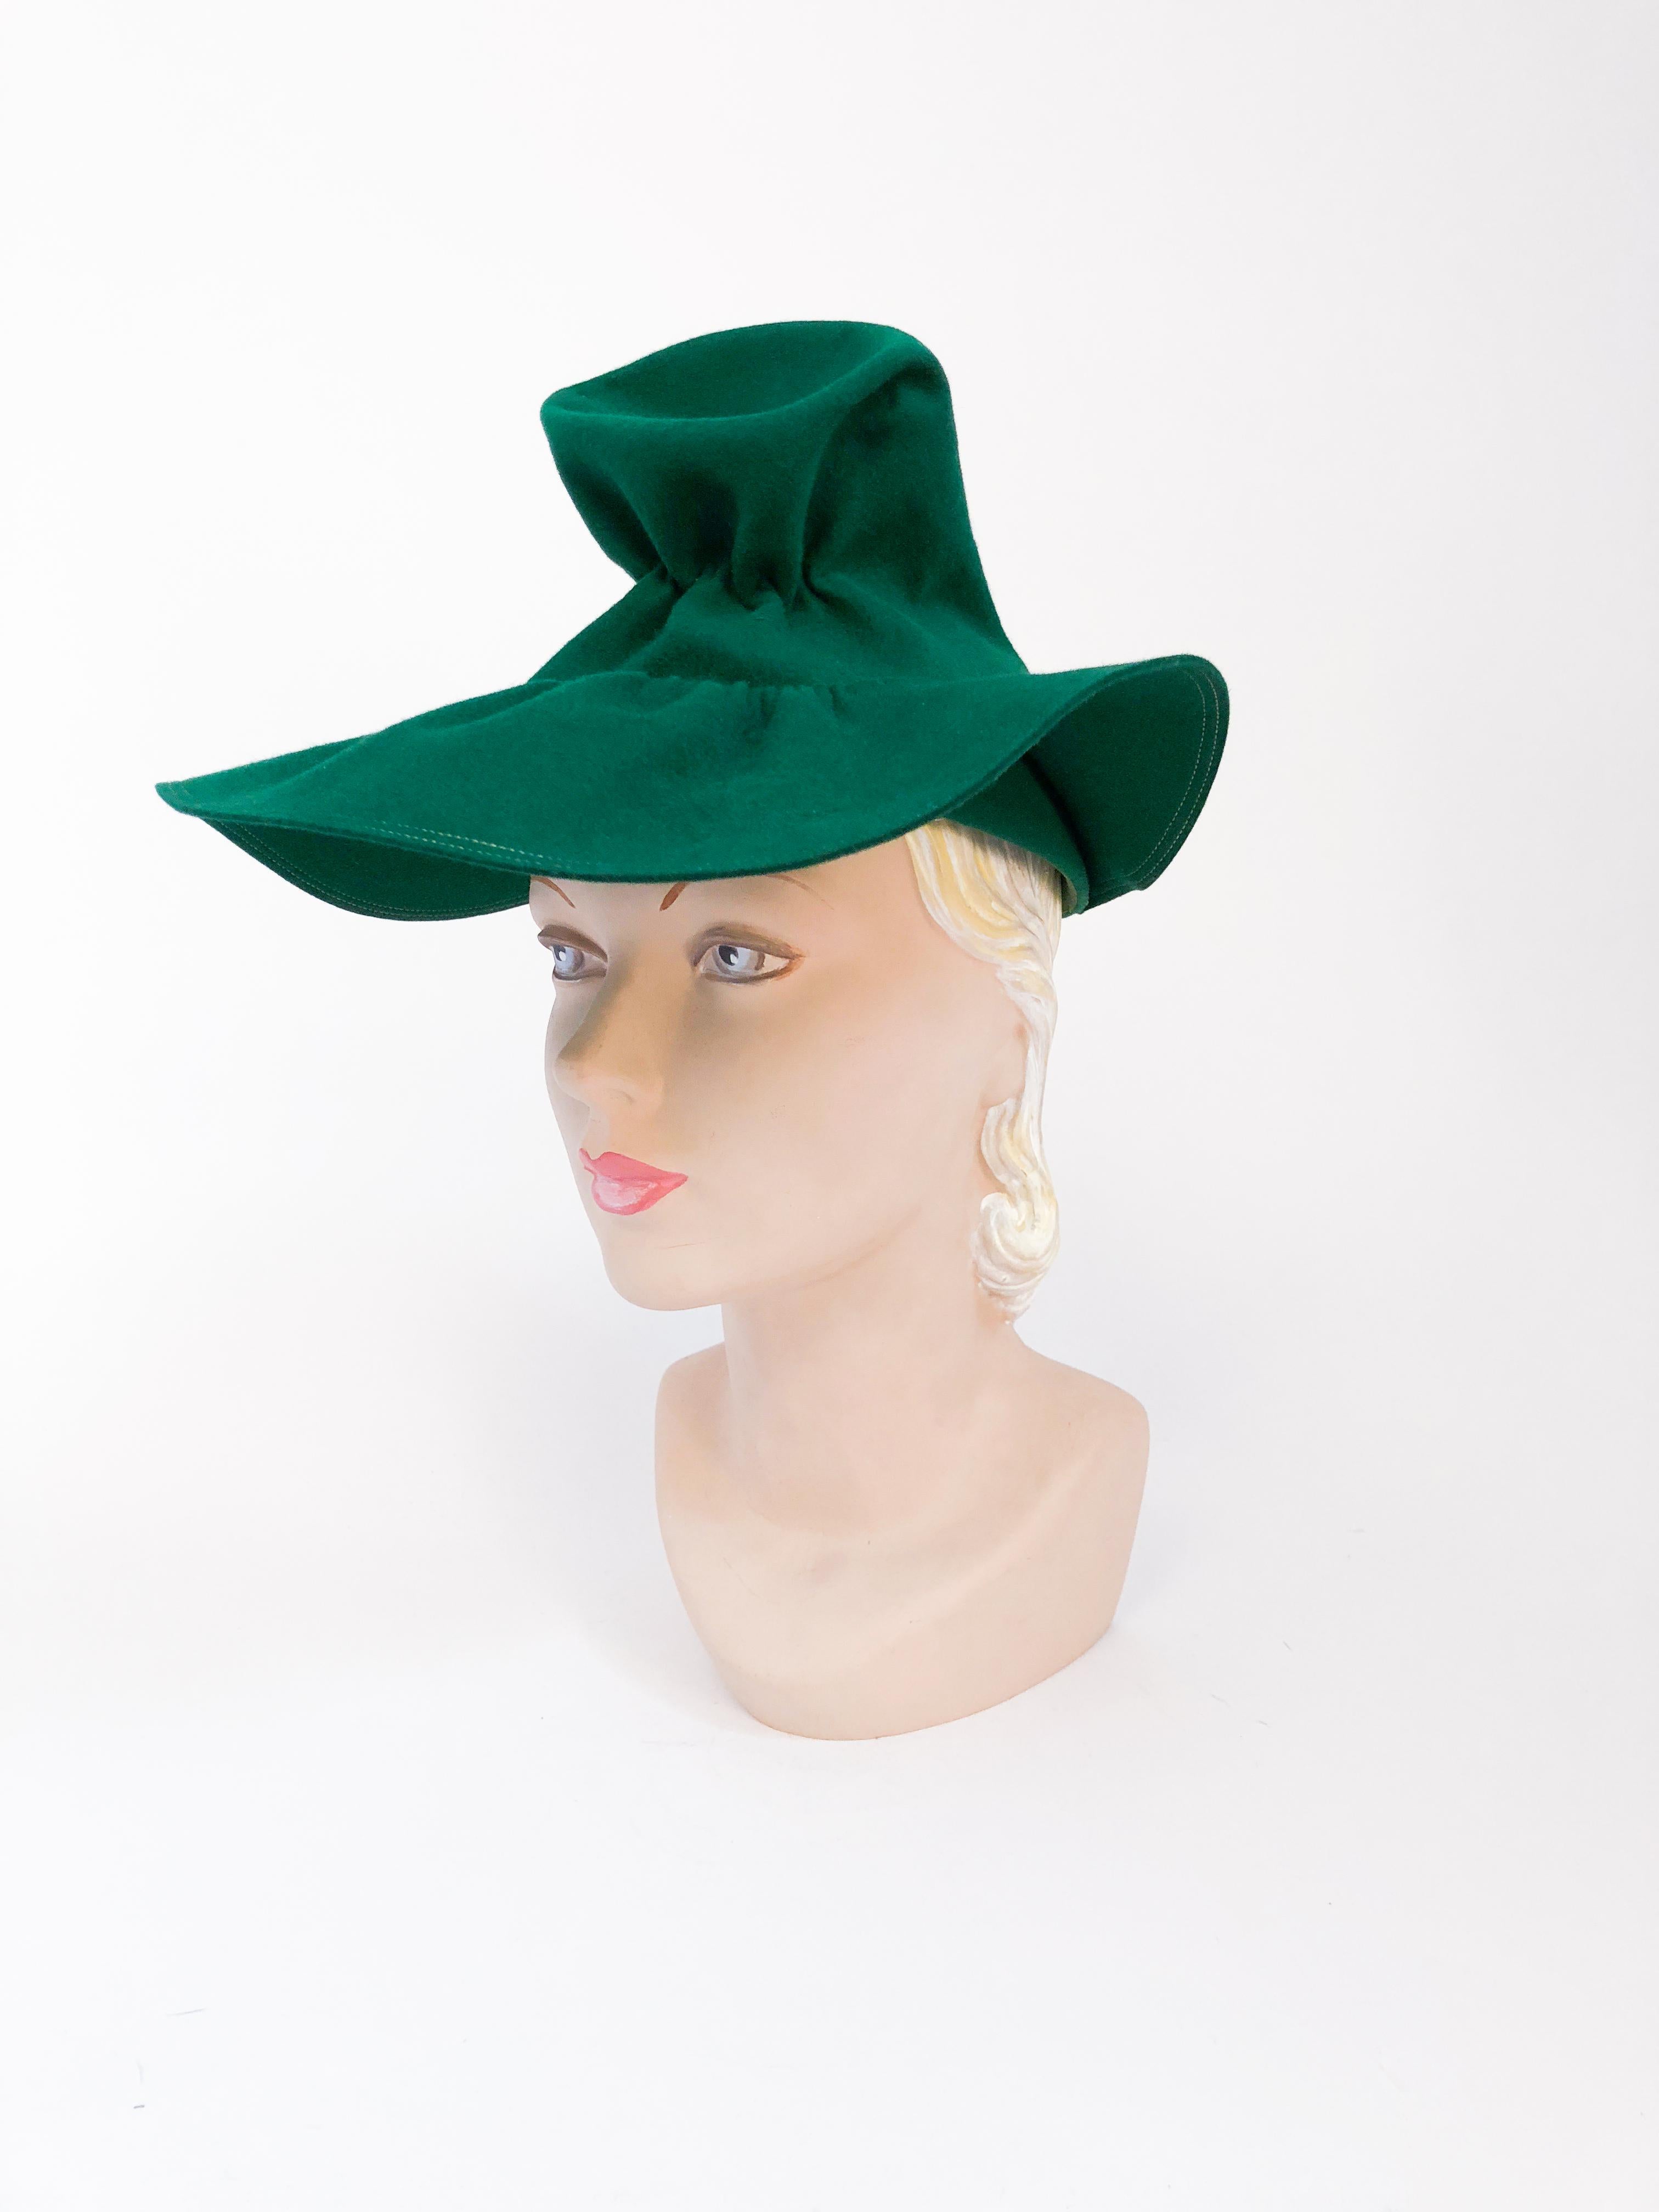 1930s Kelly Green Handmade Beaver Felt Hat. Kelly green handmade hat with gathered brim and crown.